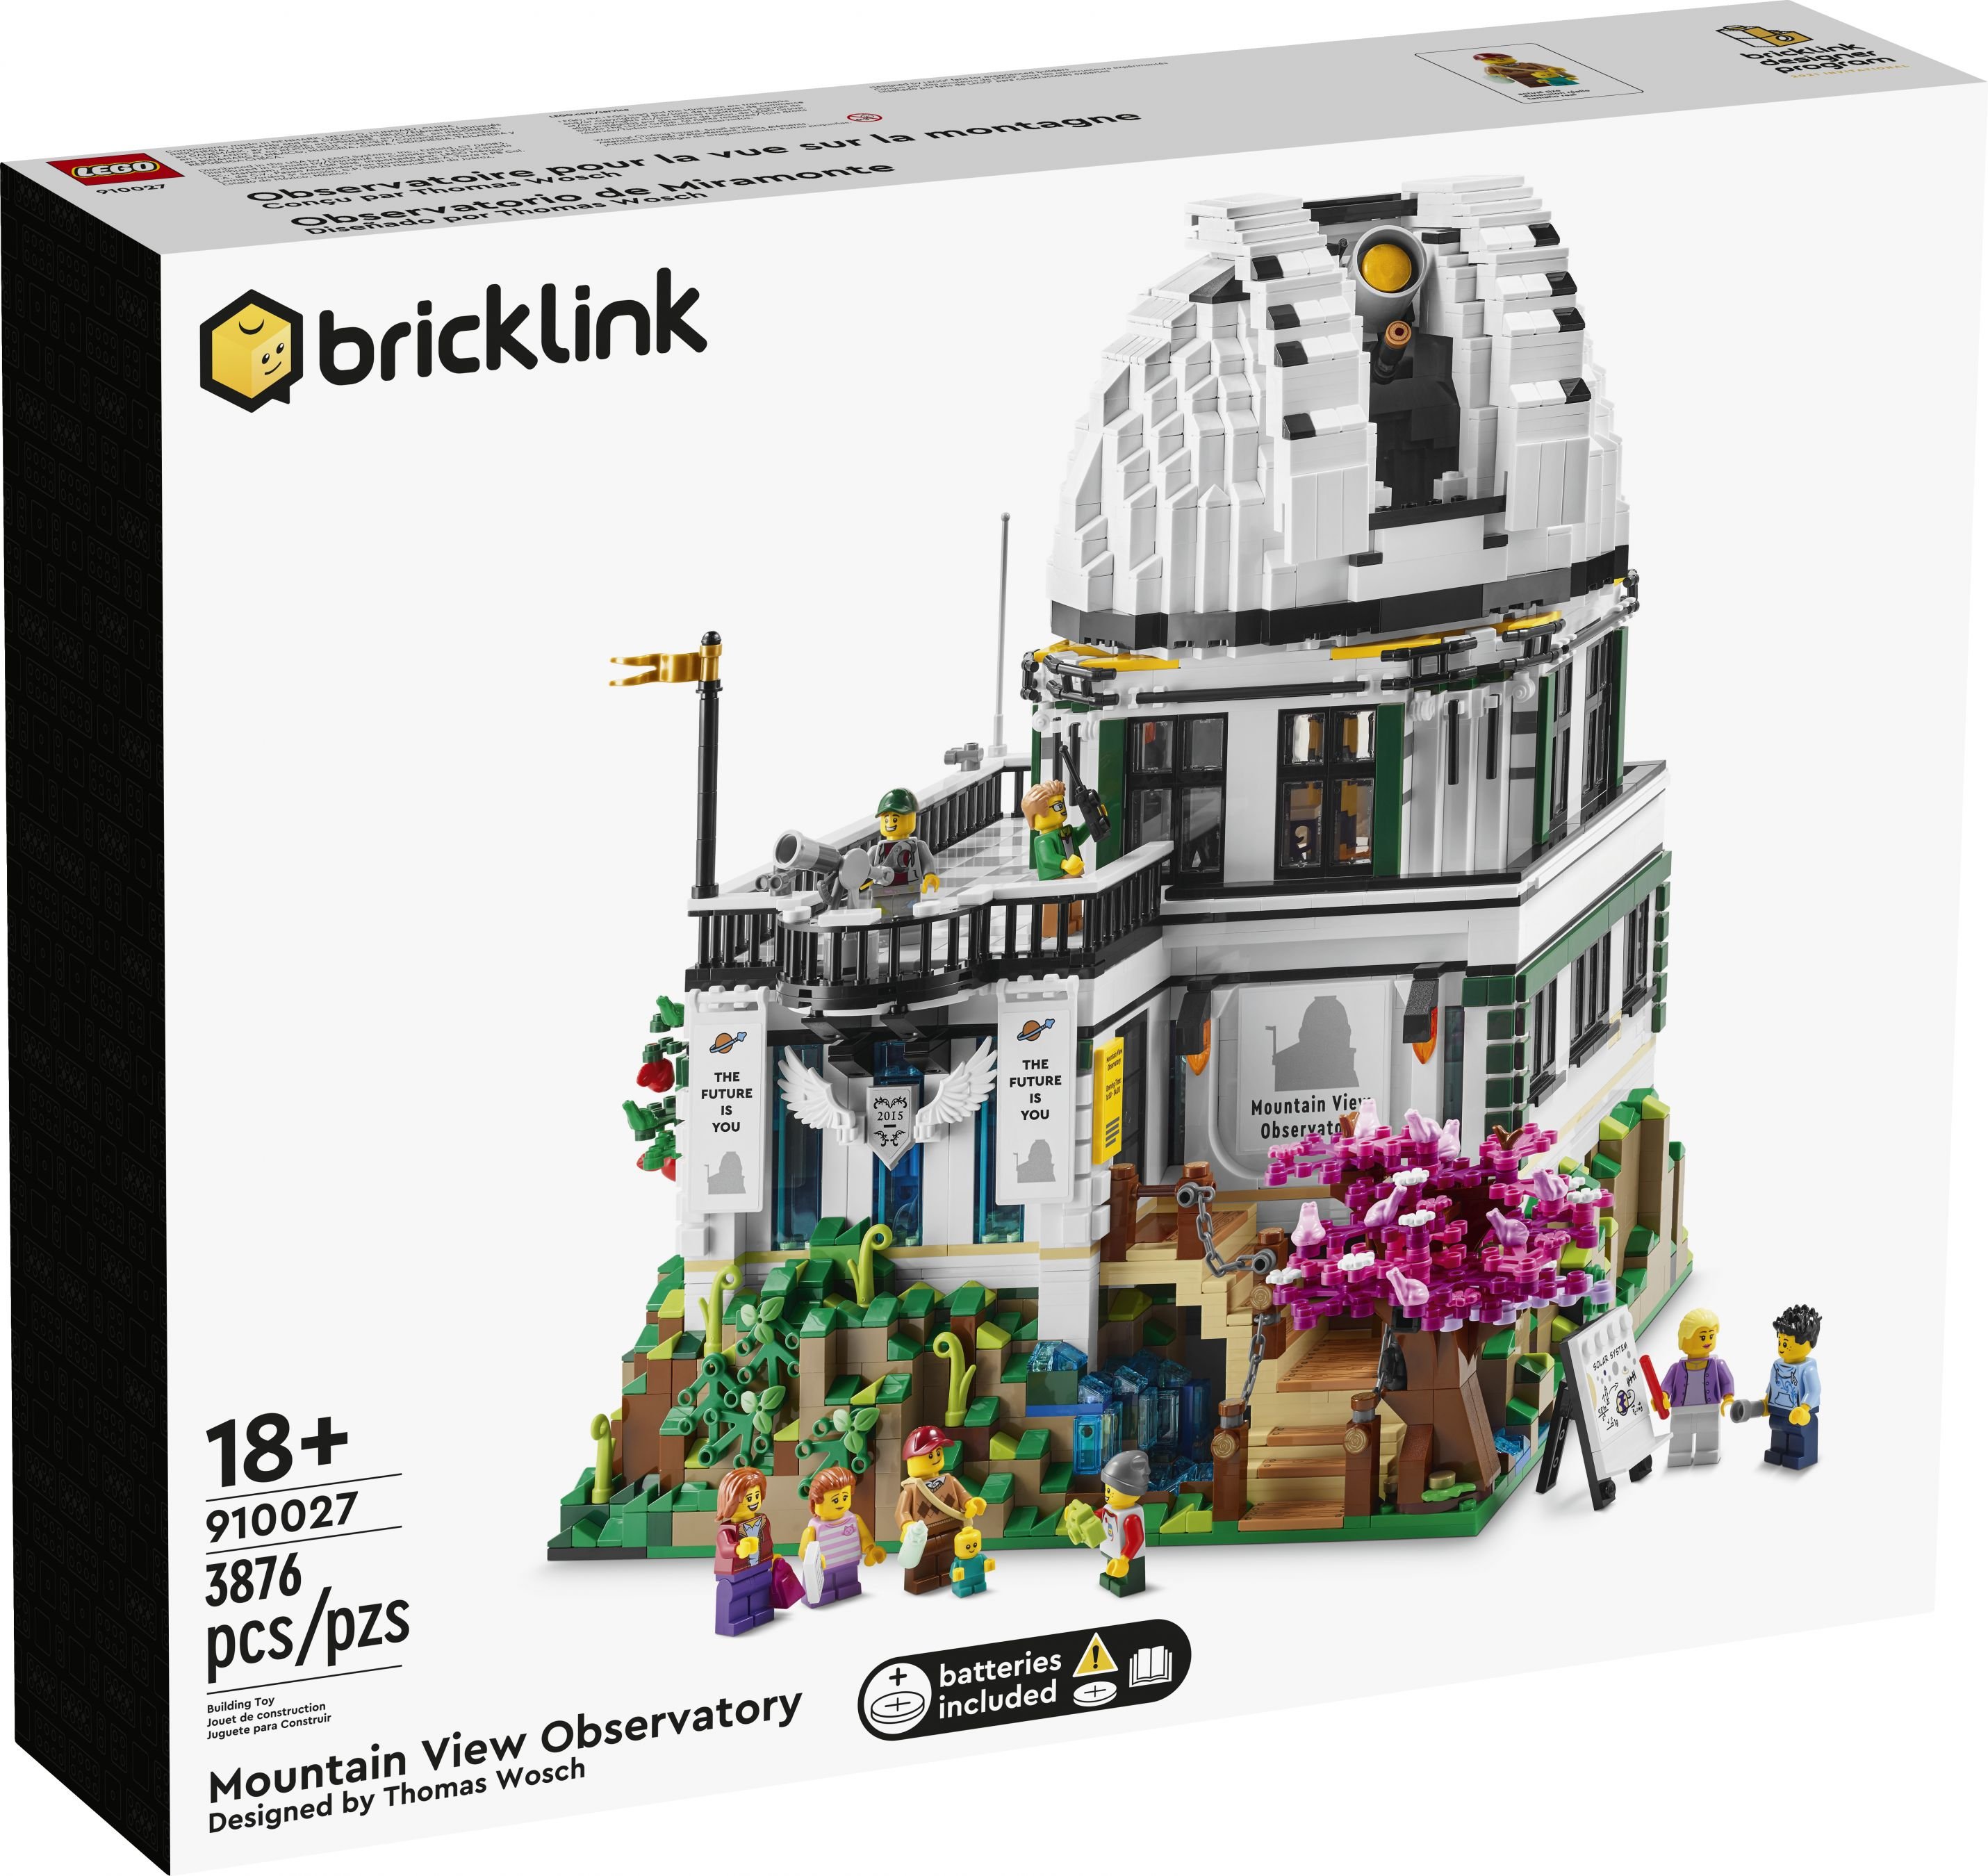 LEGO Bricklink 910027 Bergsternwarte LEGO_910027_Box1_v39.jpg